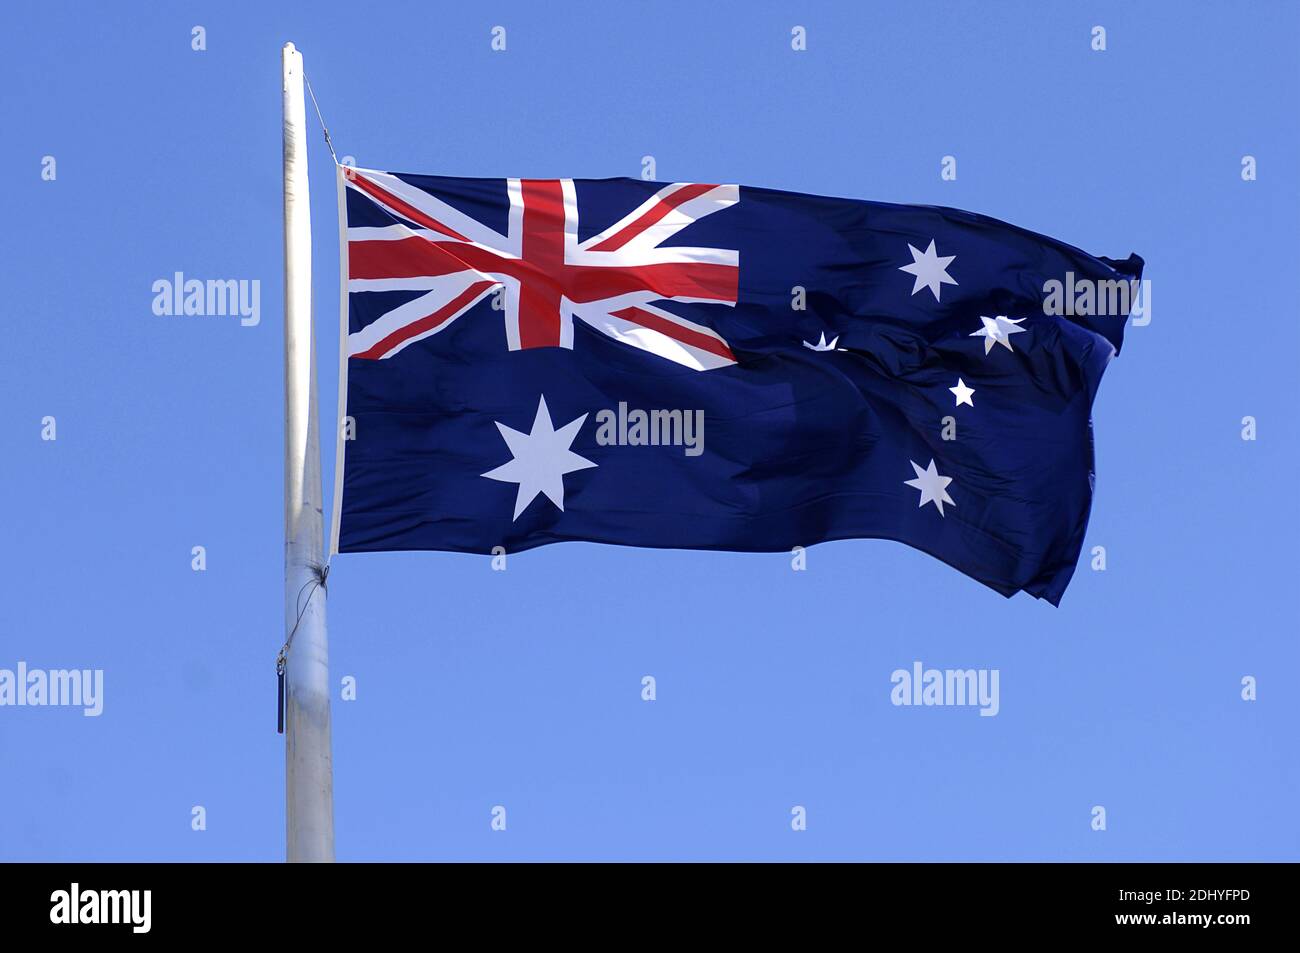 Australische Nationalfahne - Nationalflagge - Blauer Himmel Stock Photo